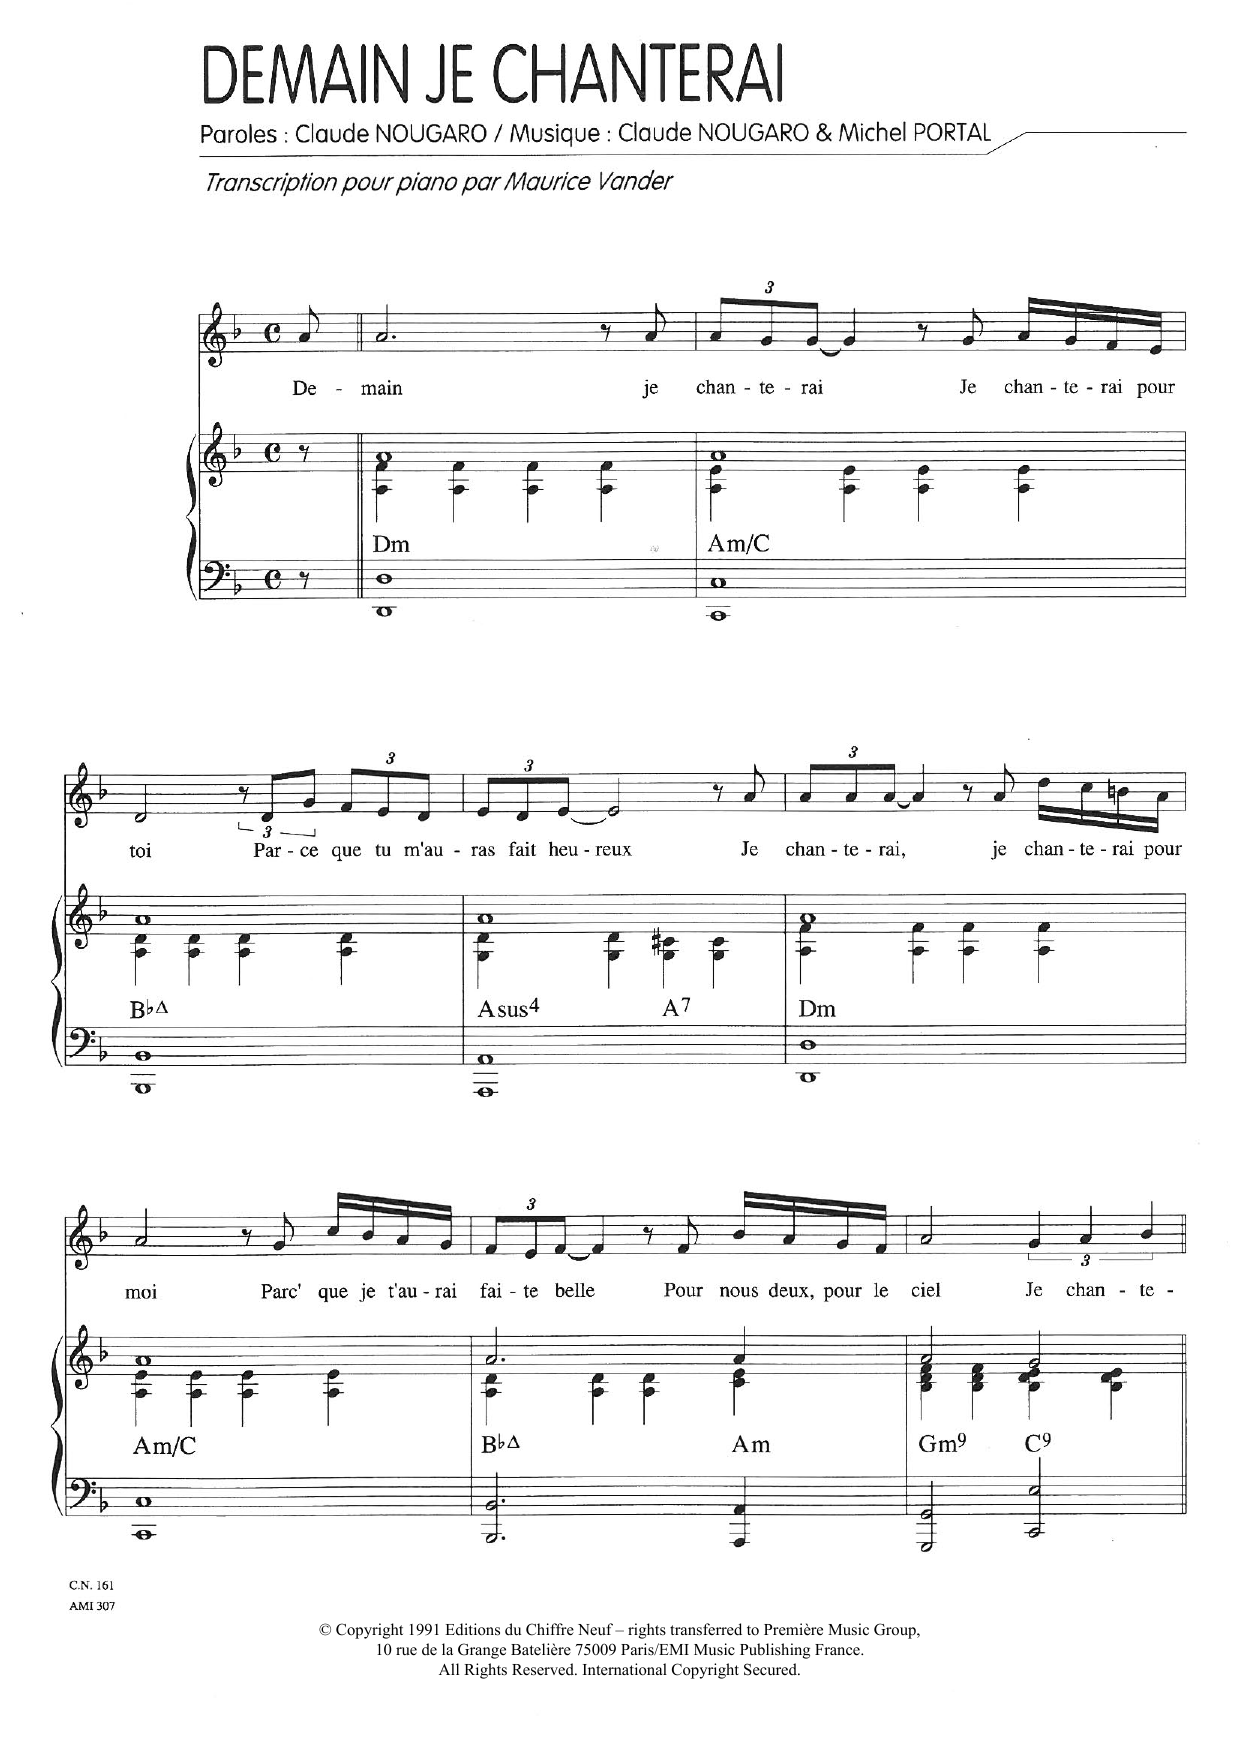 Claude Nougaro Demain Je Chanterai Sheet Music Notes & Chords for Piano & Vocal - Download or Print PDF